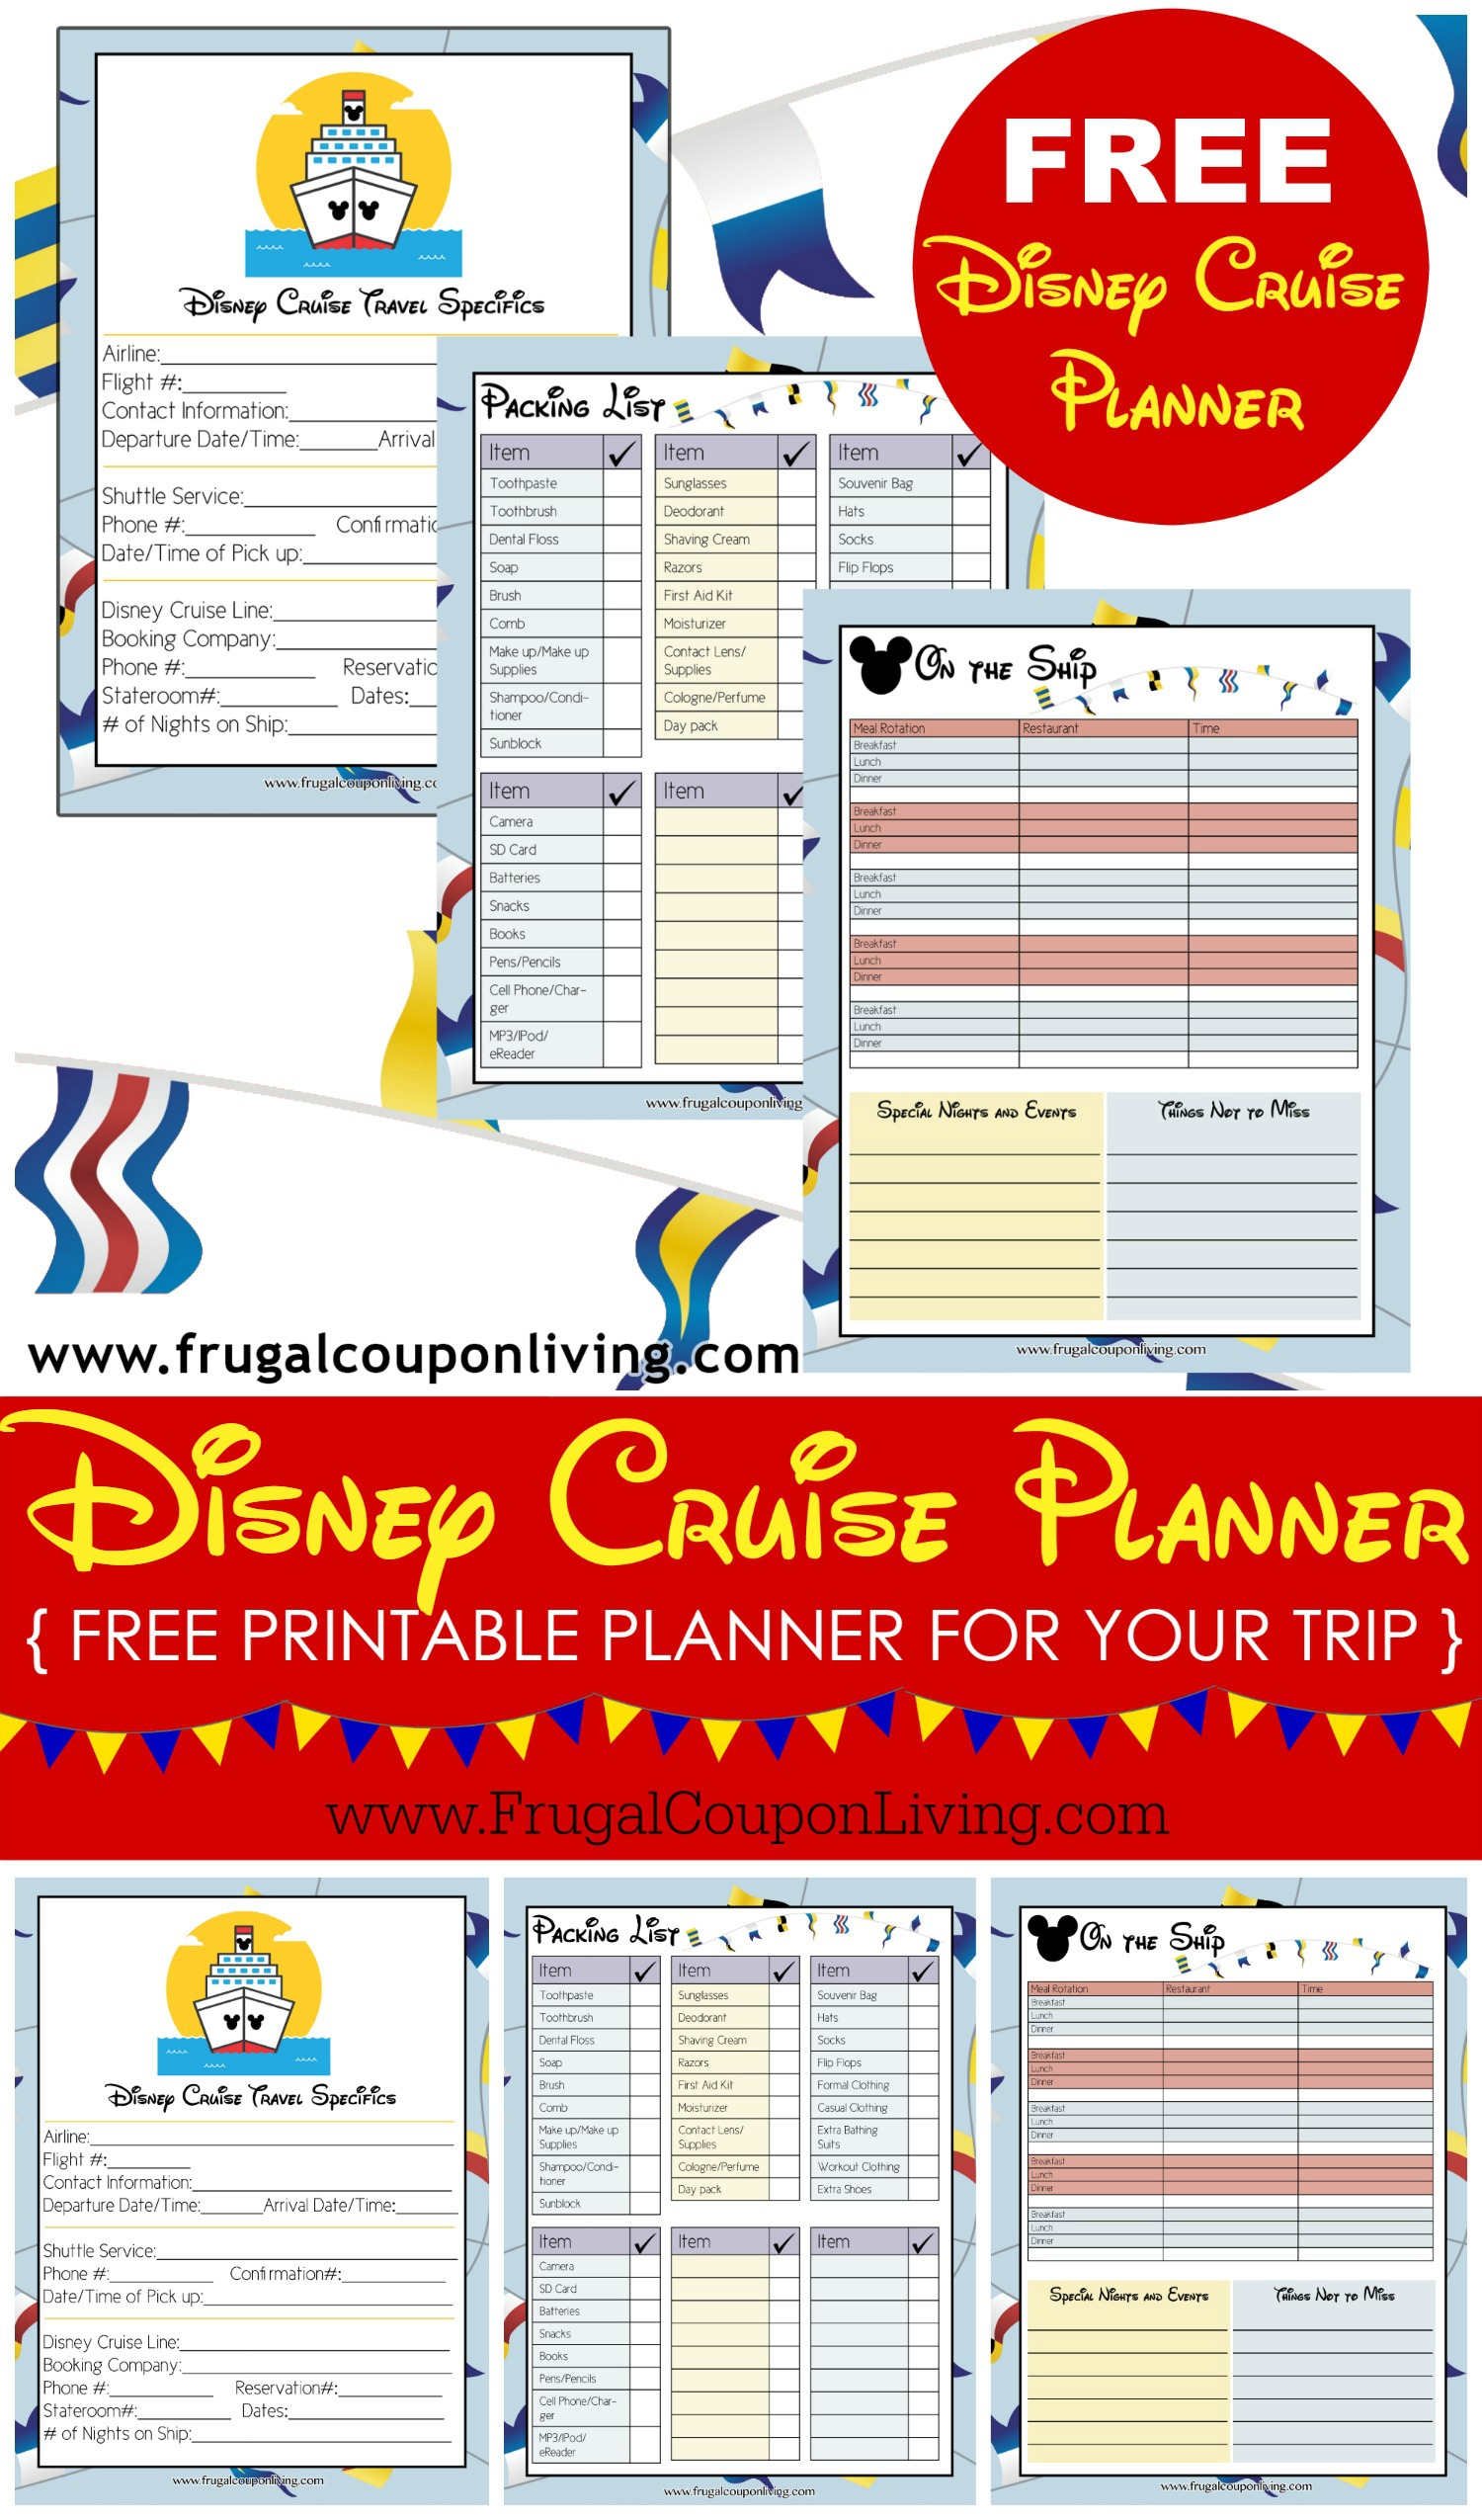 disney-cruise-planner-free-printable-frugal-coupon-living